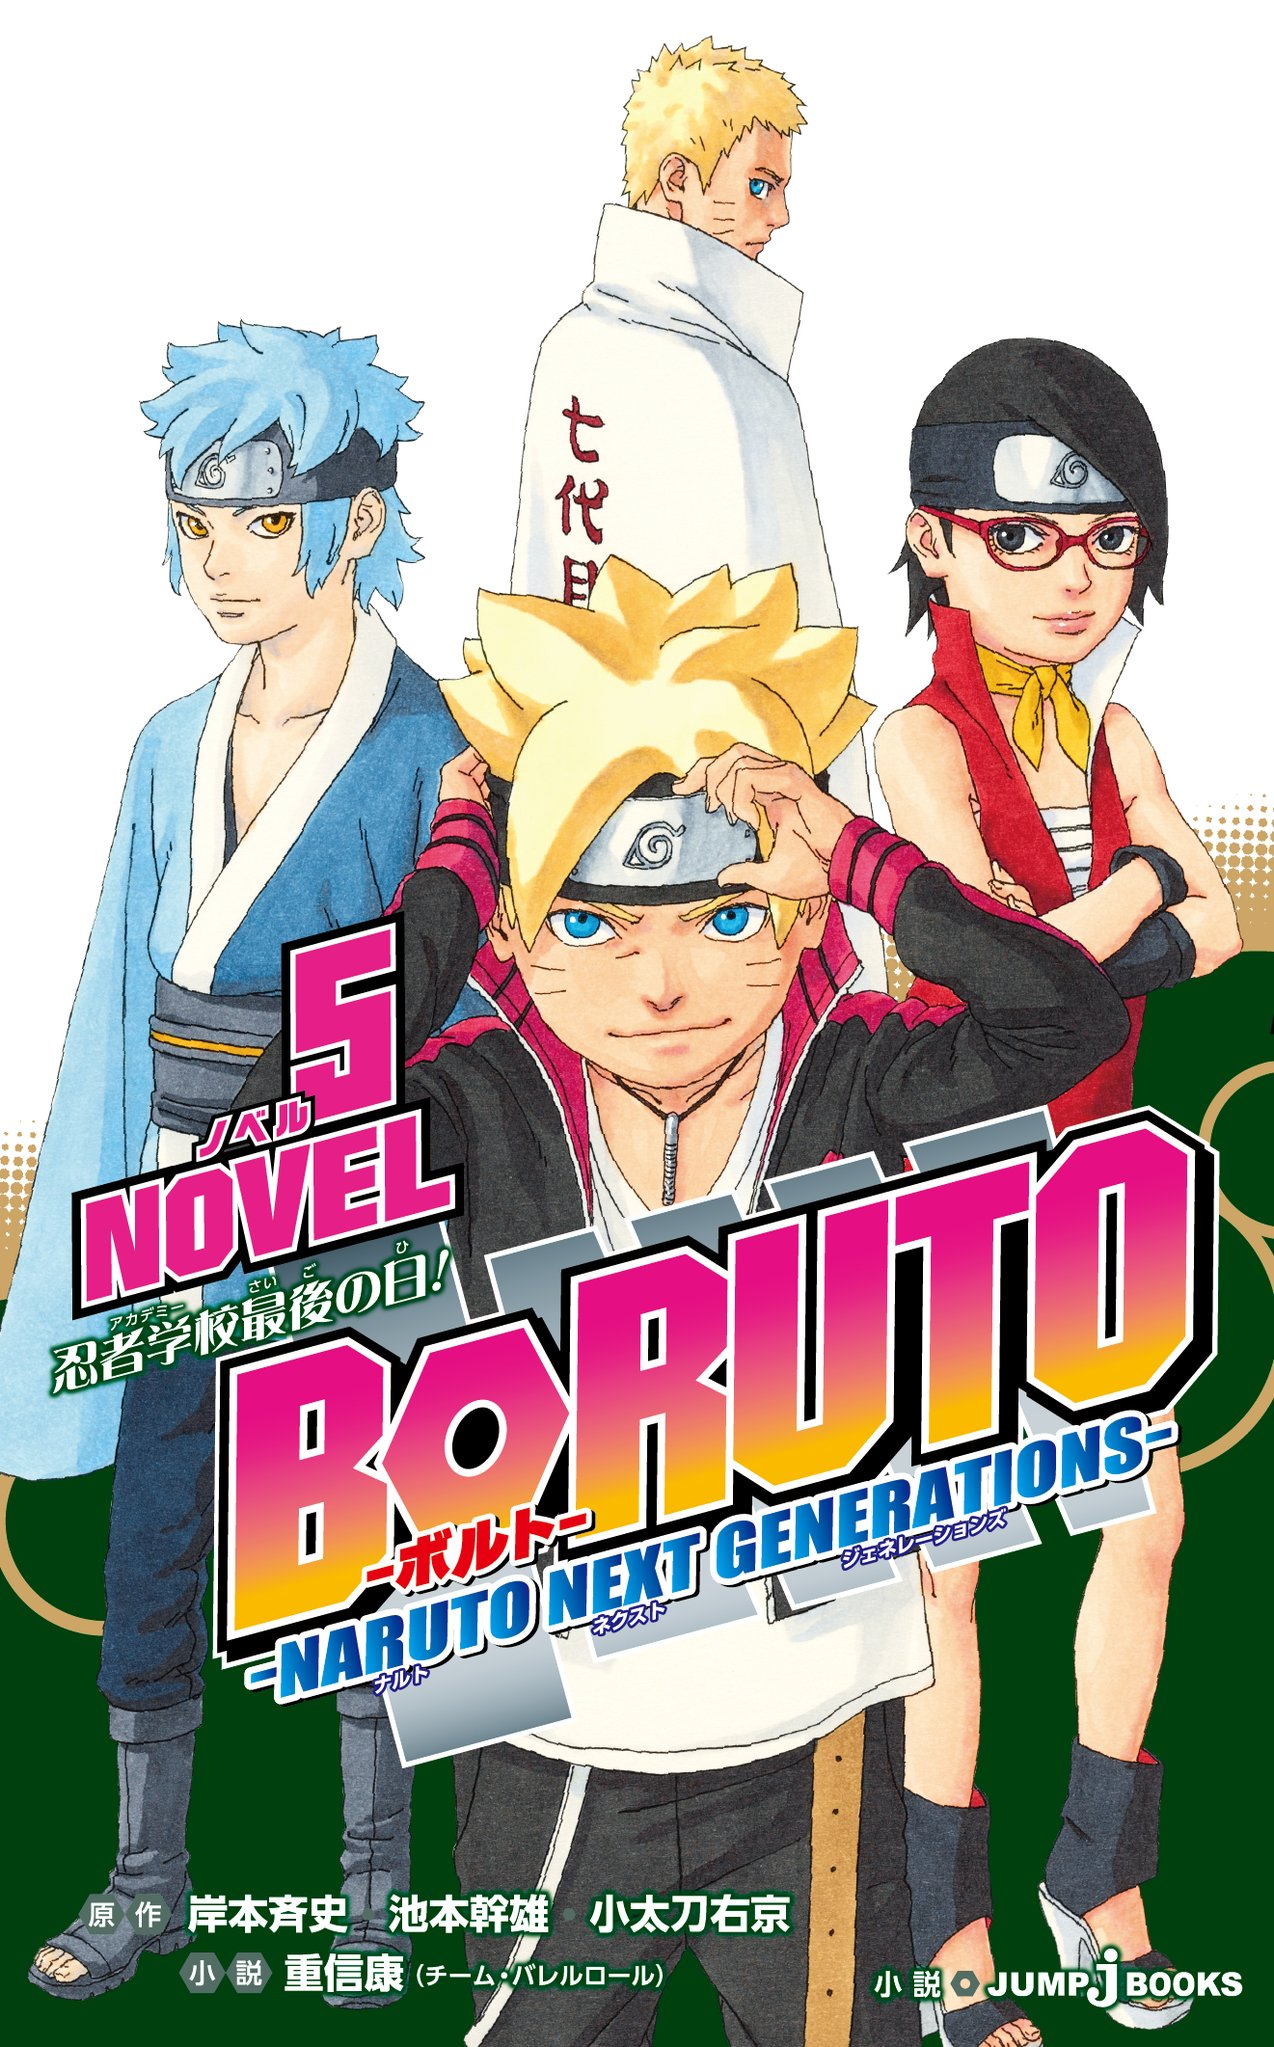 Autor de Boruto: Naruto Next Generations comenta qual a principal